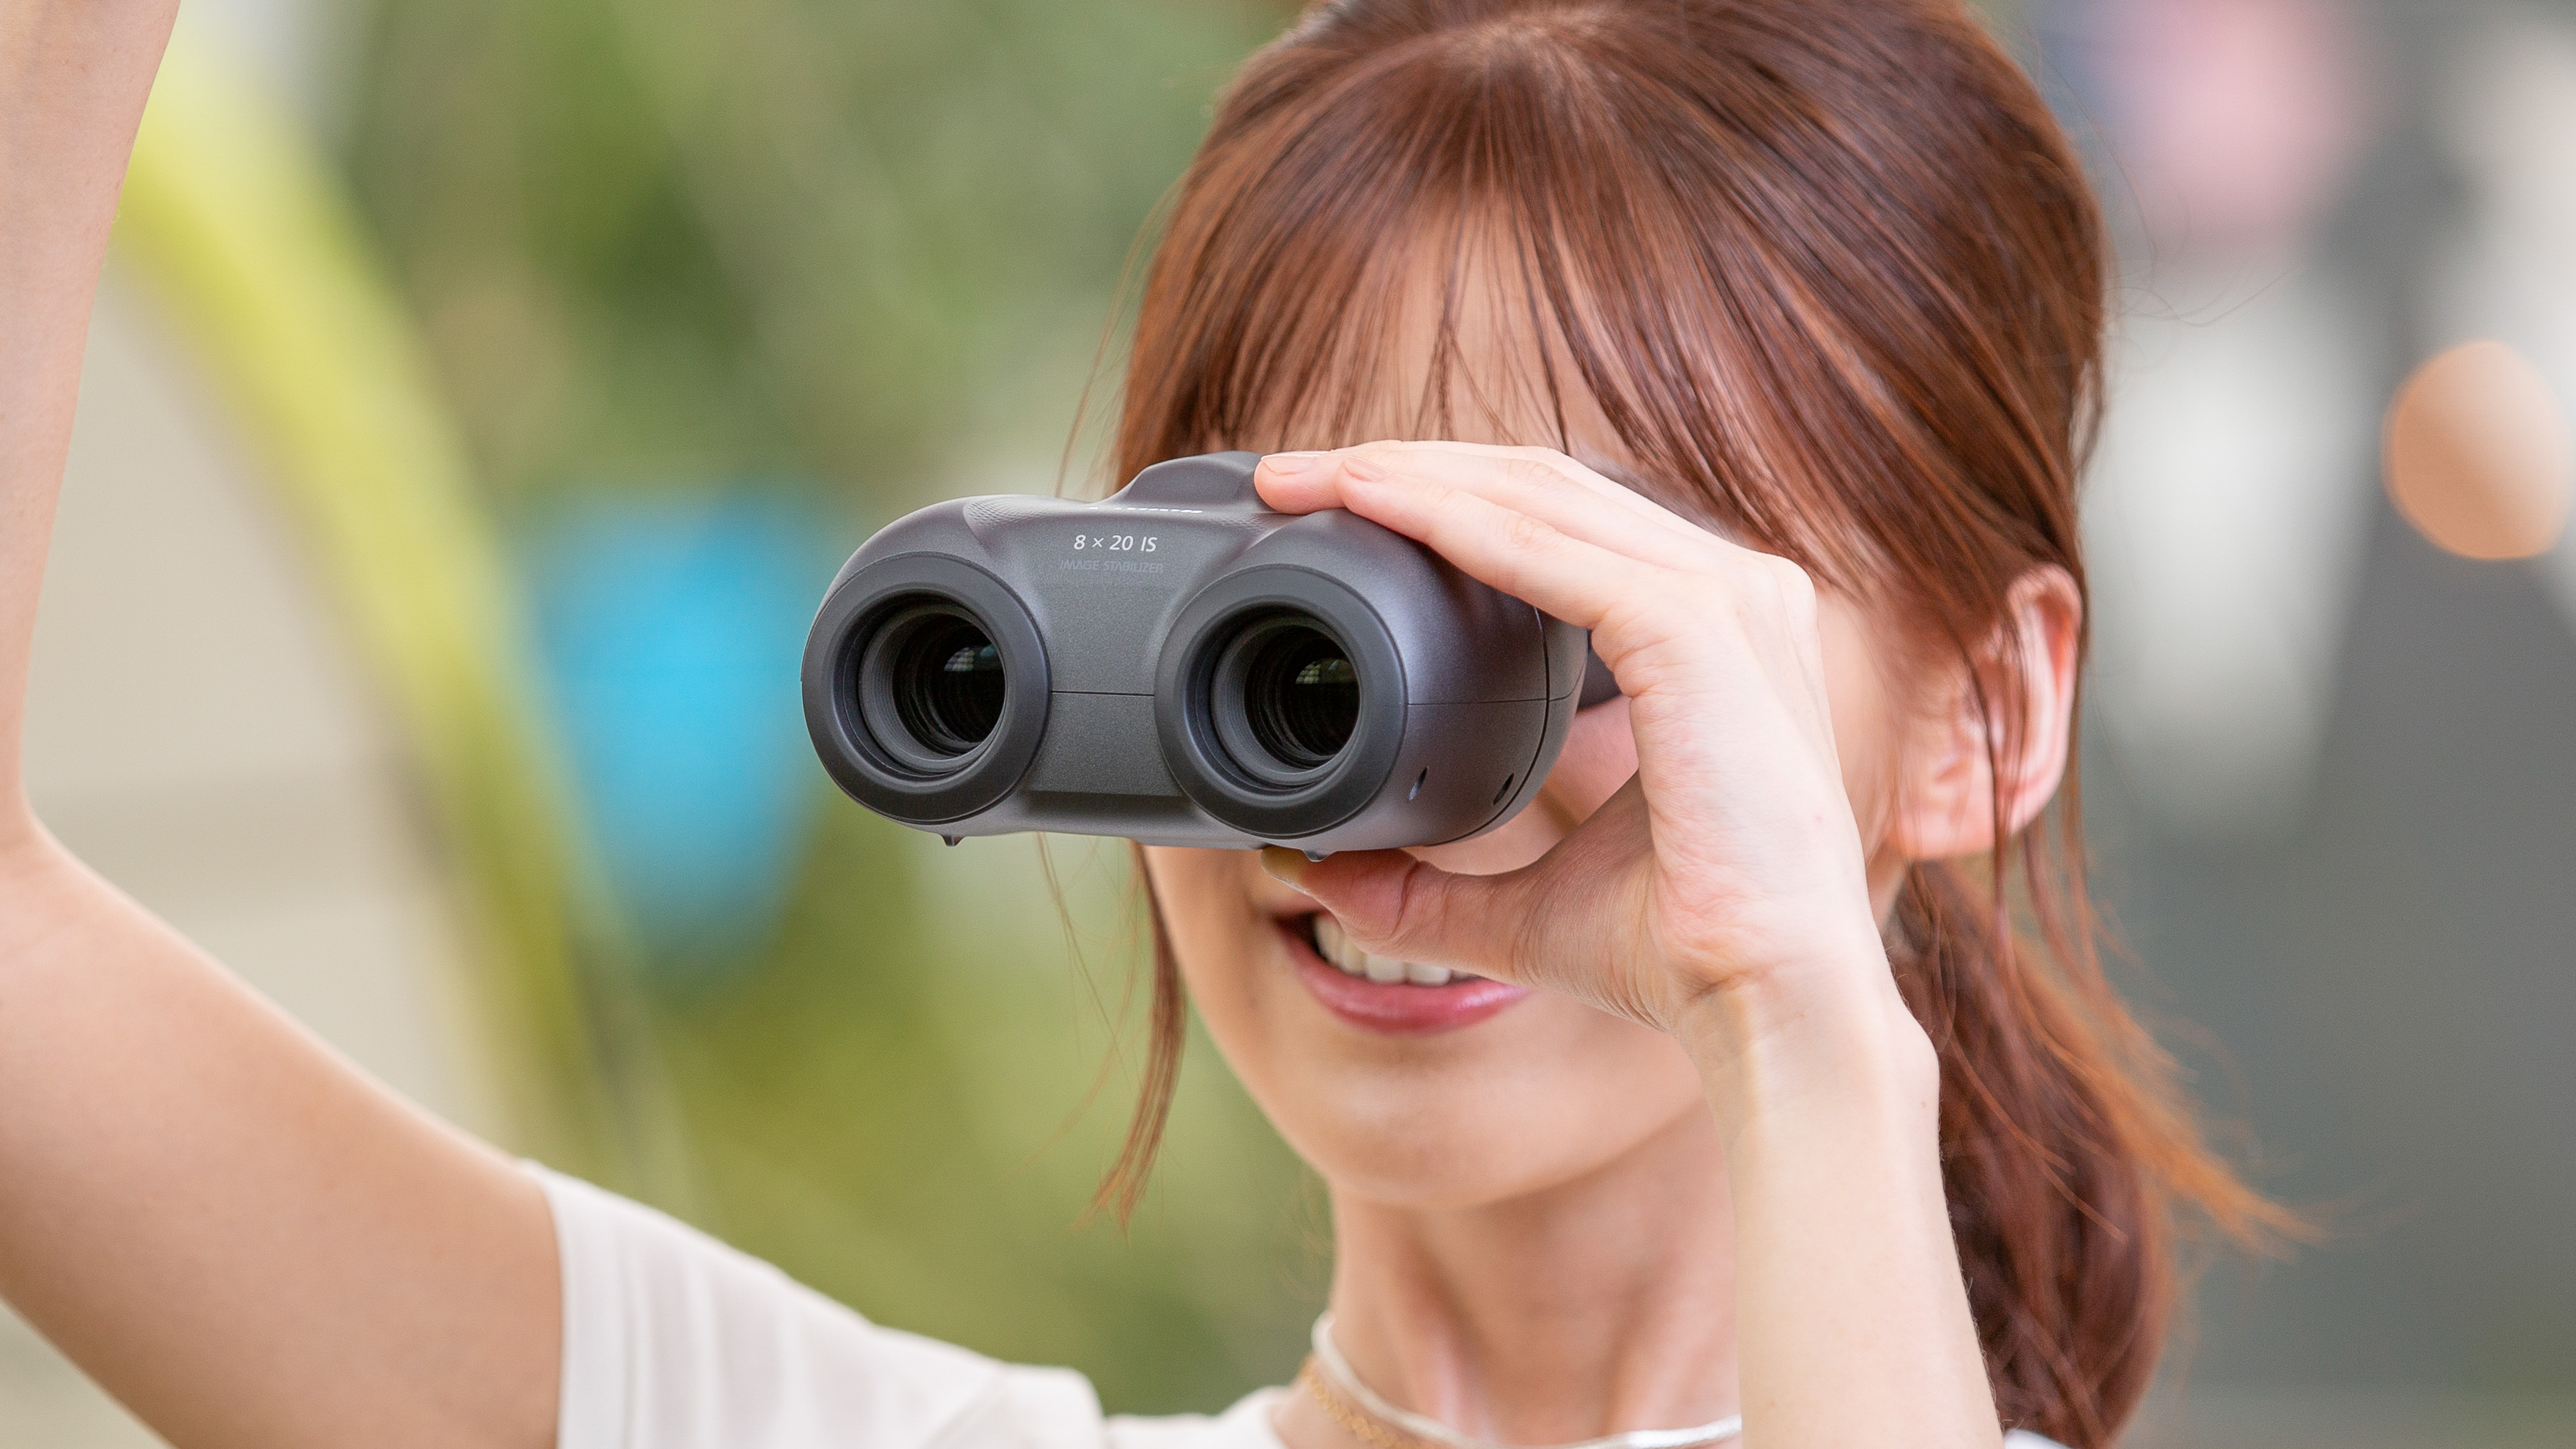 Canon 8x20 IS are world's lightest image stabilized binoculars | Digital  Camera World